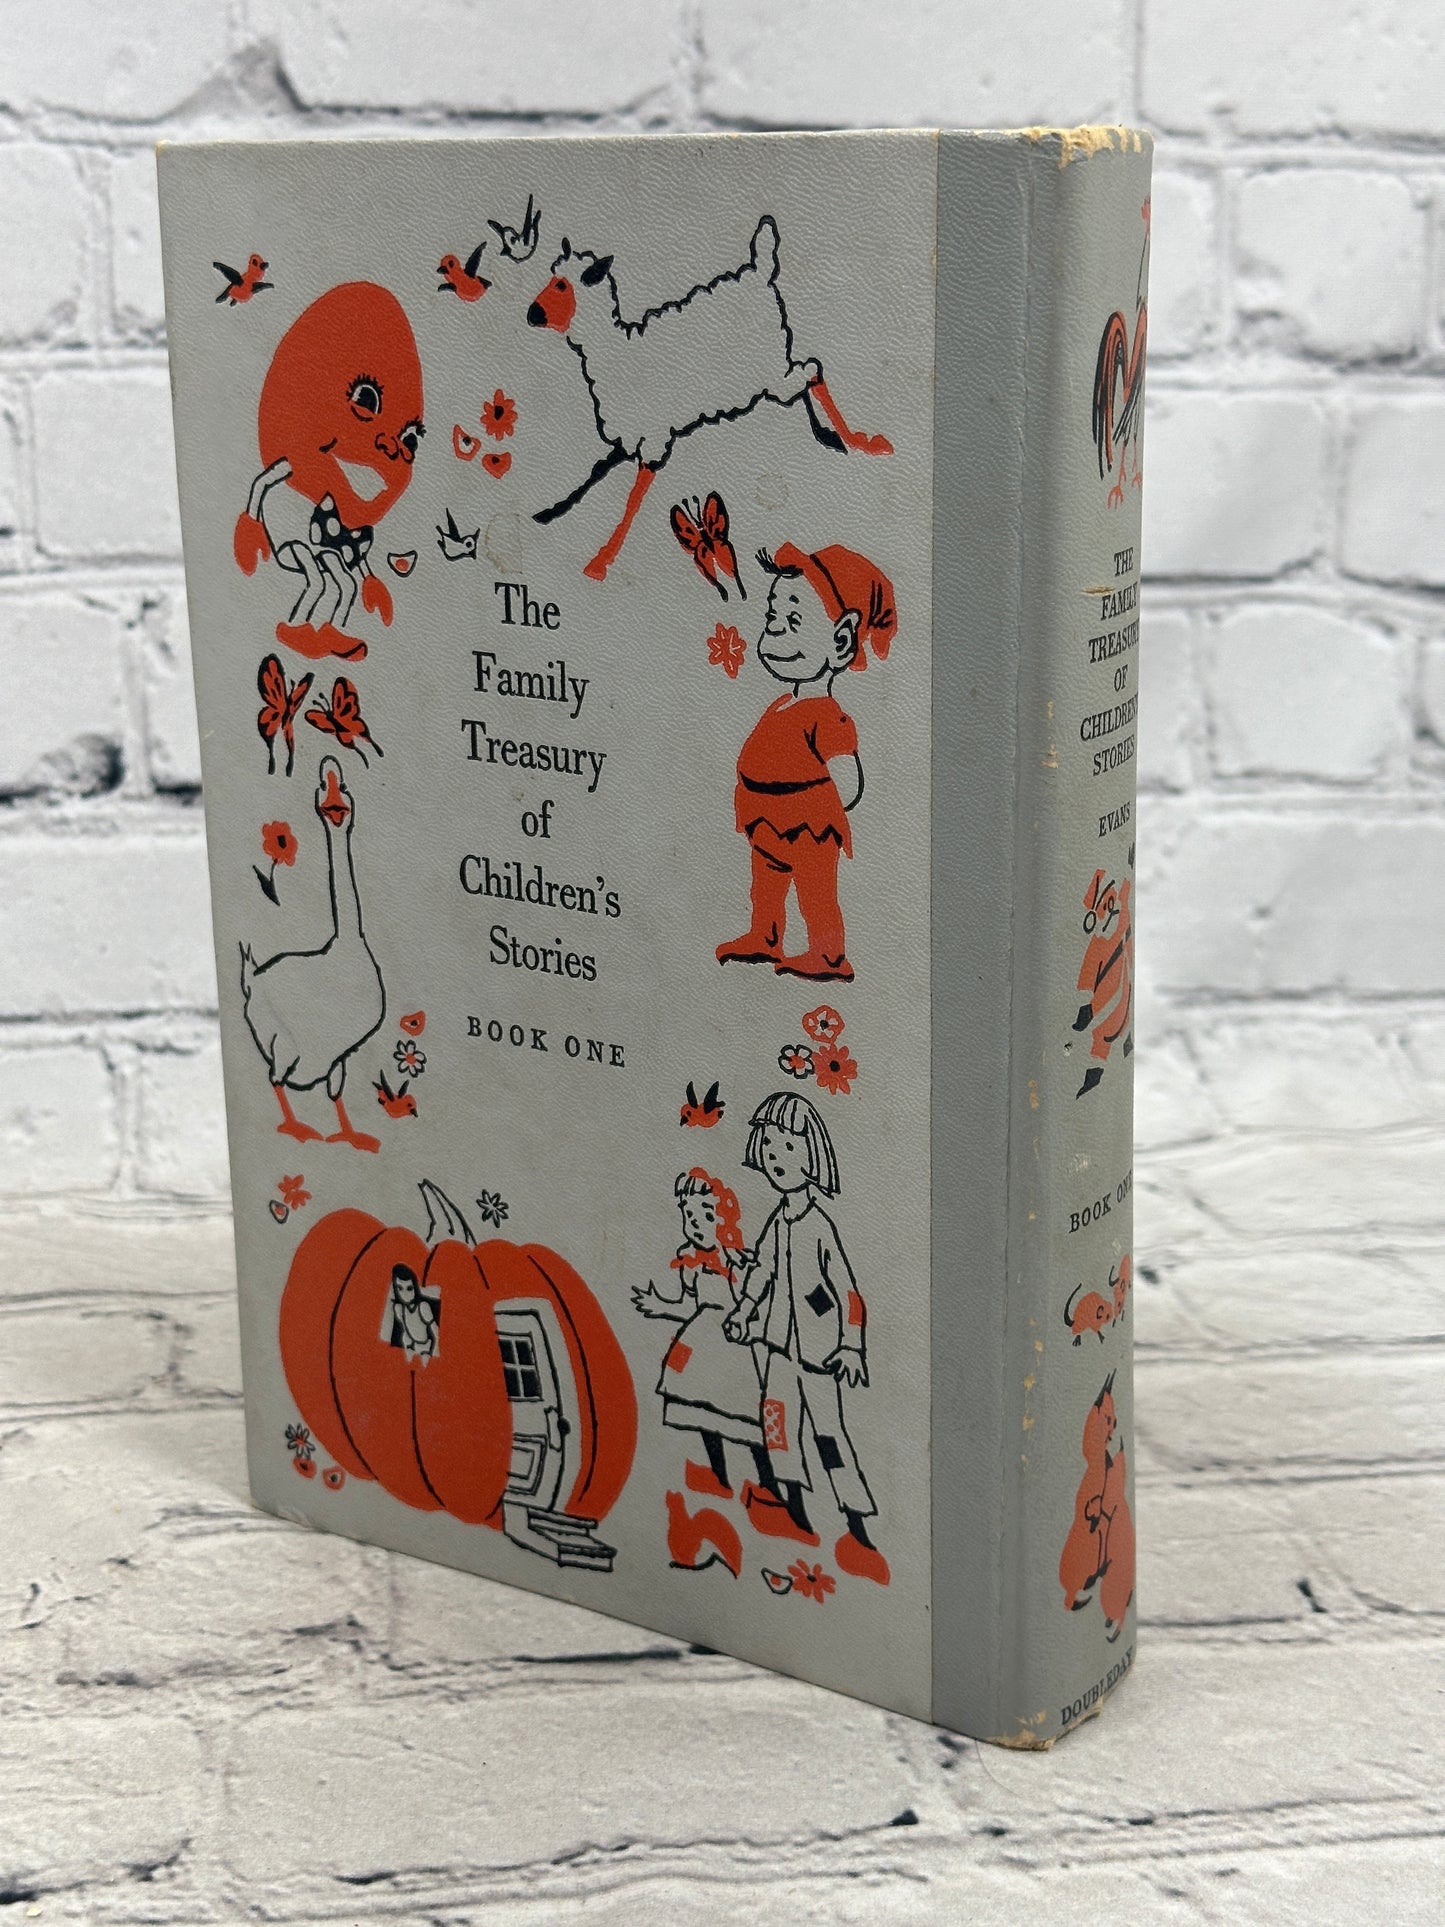 The Family Treasury of Children's Stories: Book One by Pauline Rush Evans